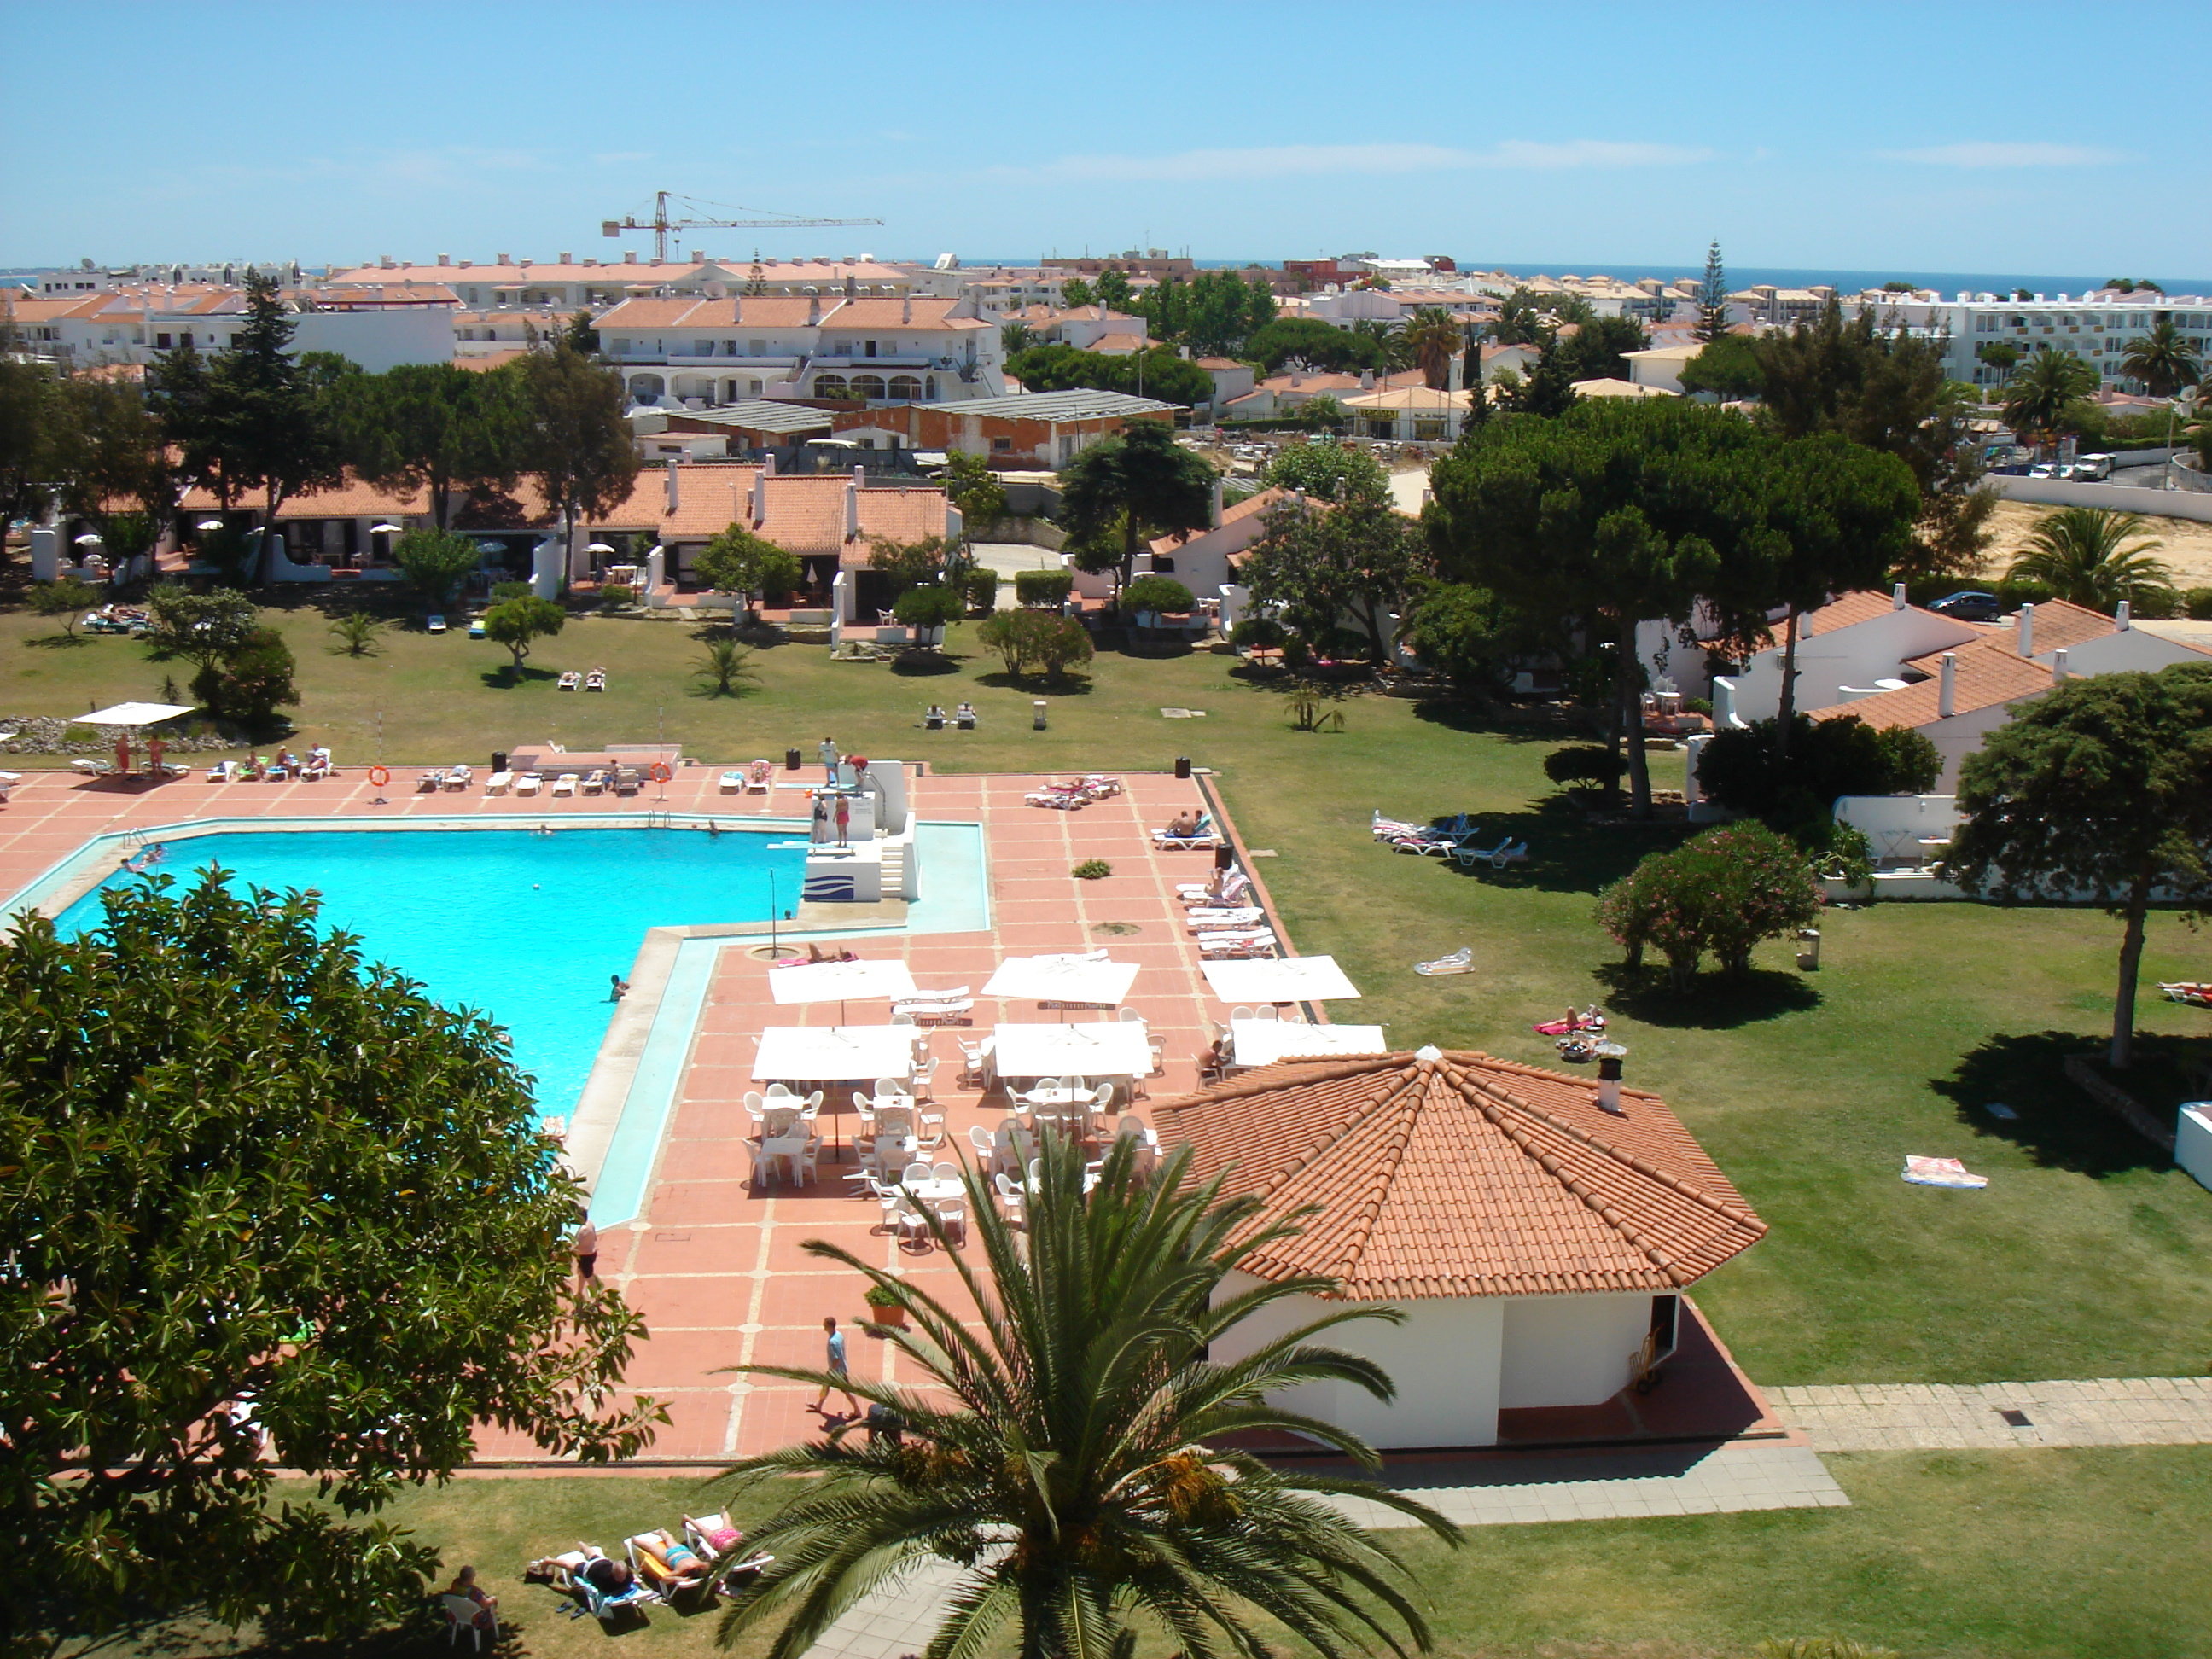 Vilanova resort image